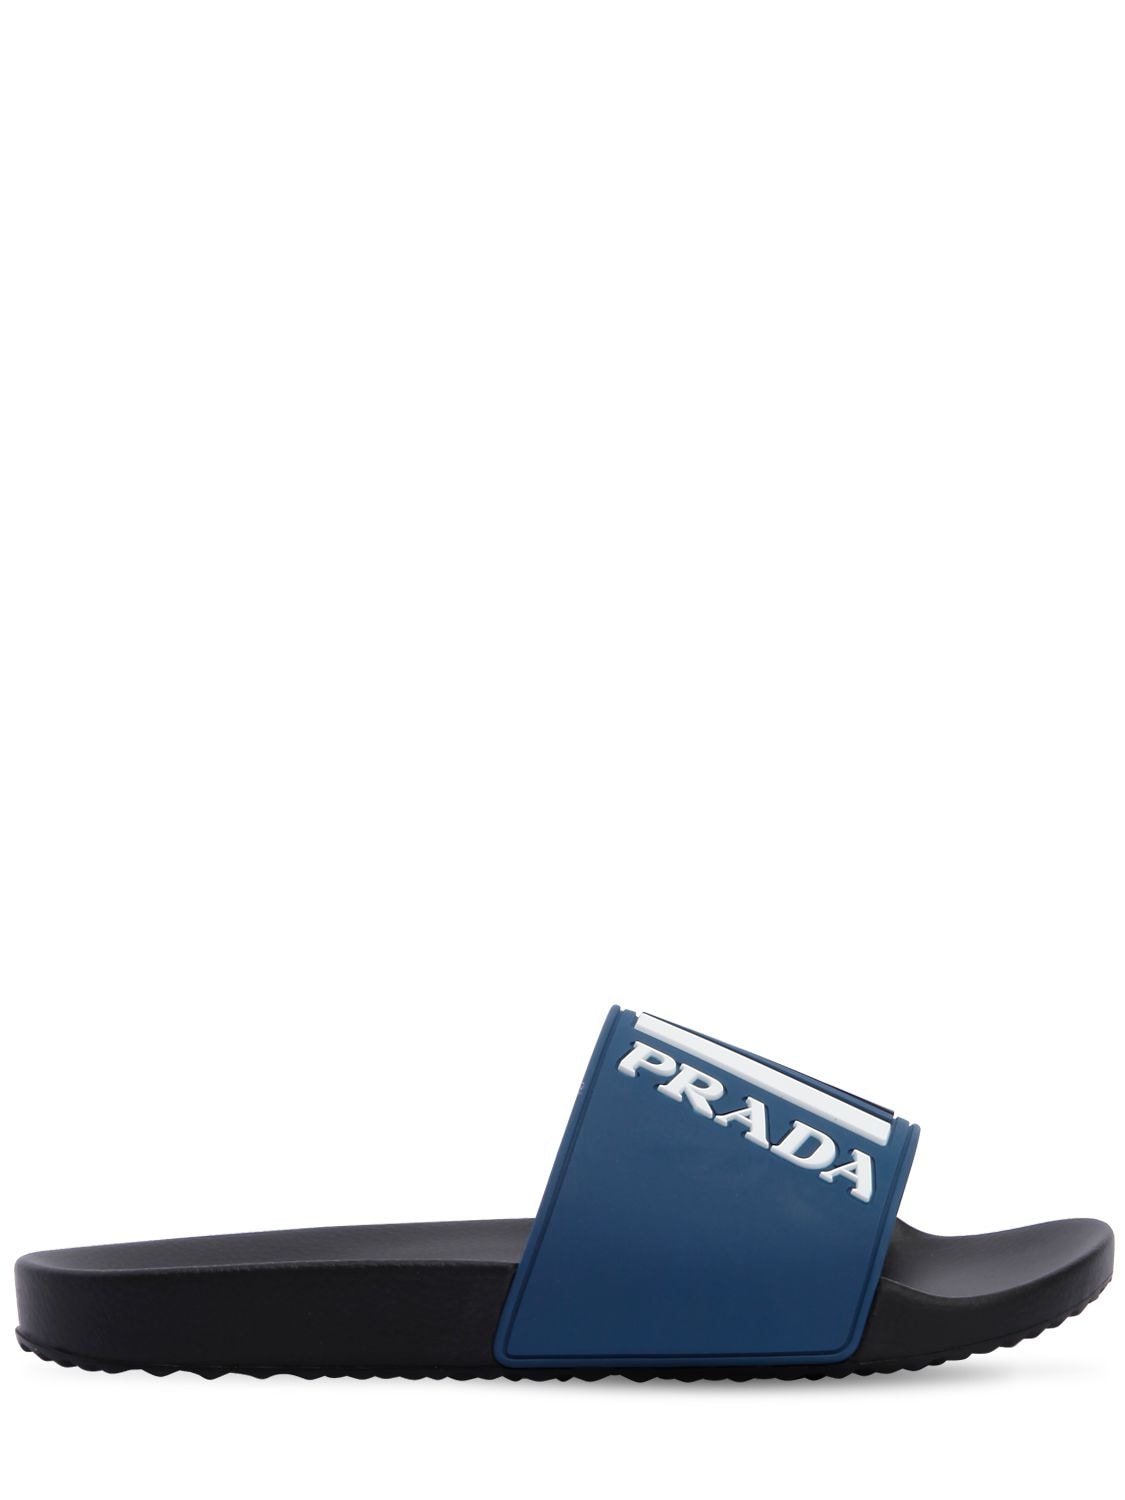 Prada Logo Rubber Slide Sandals In Blue/multi